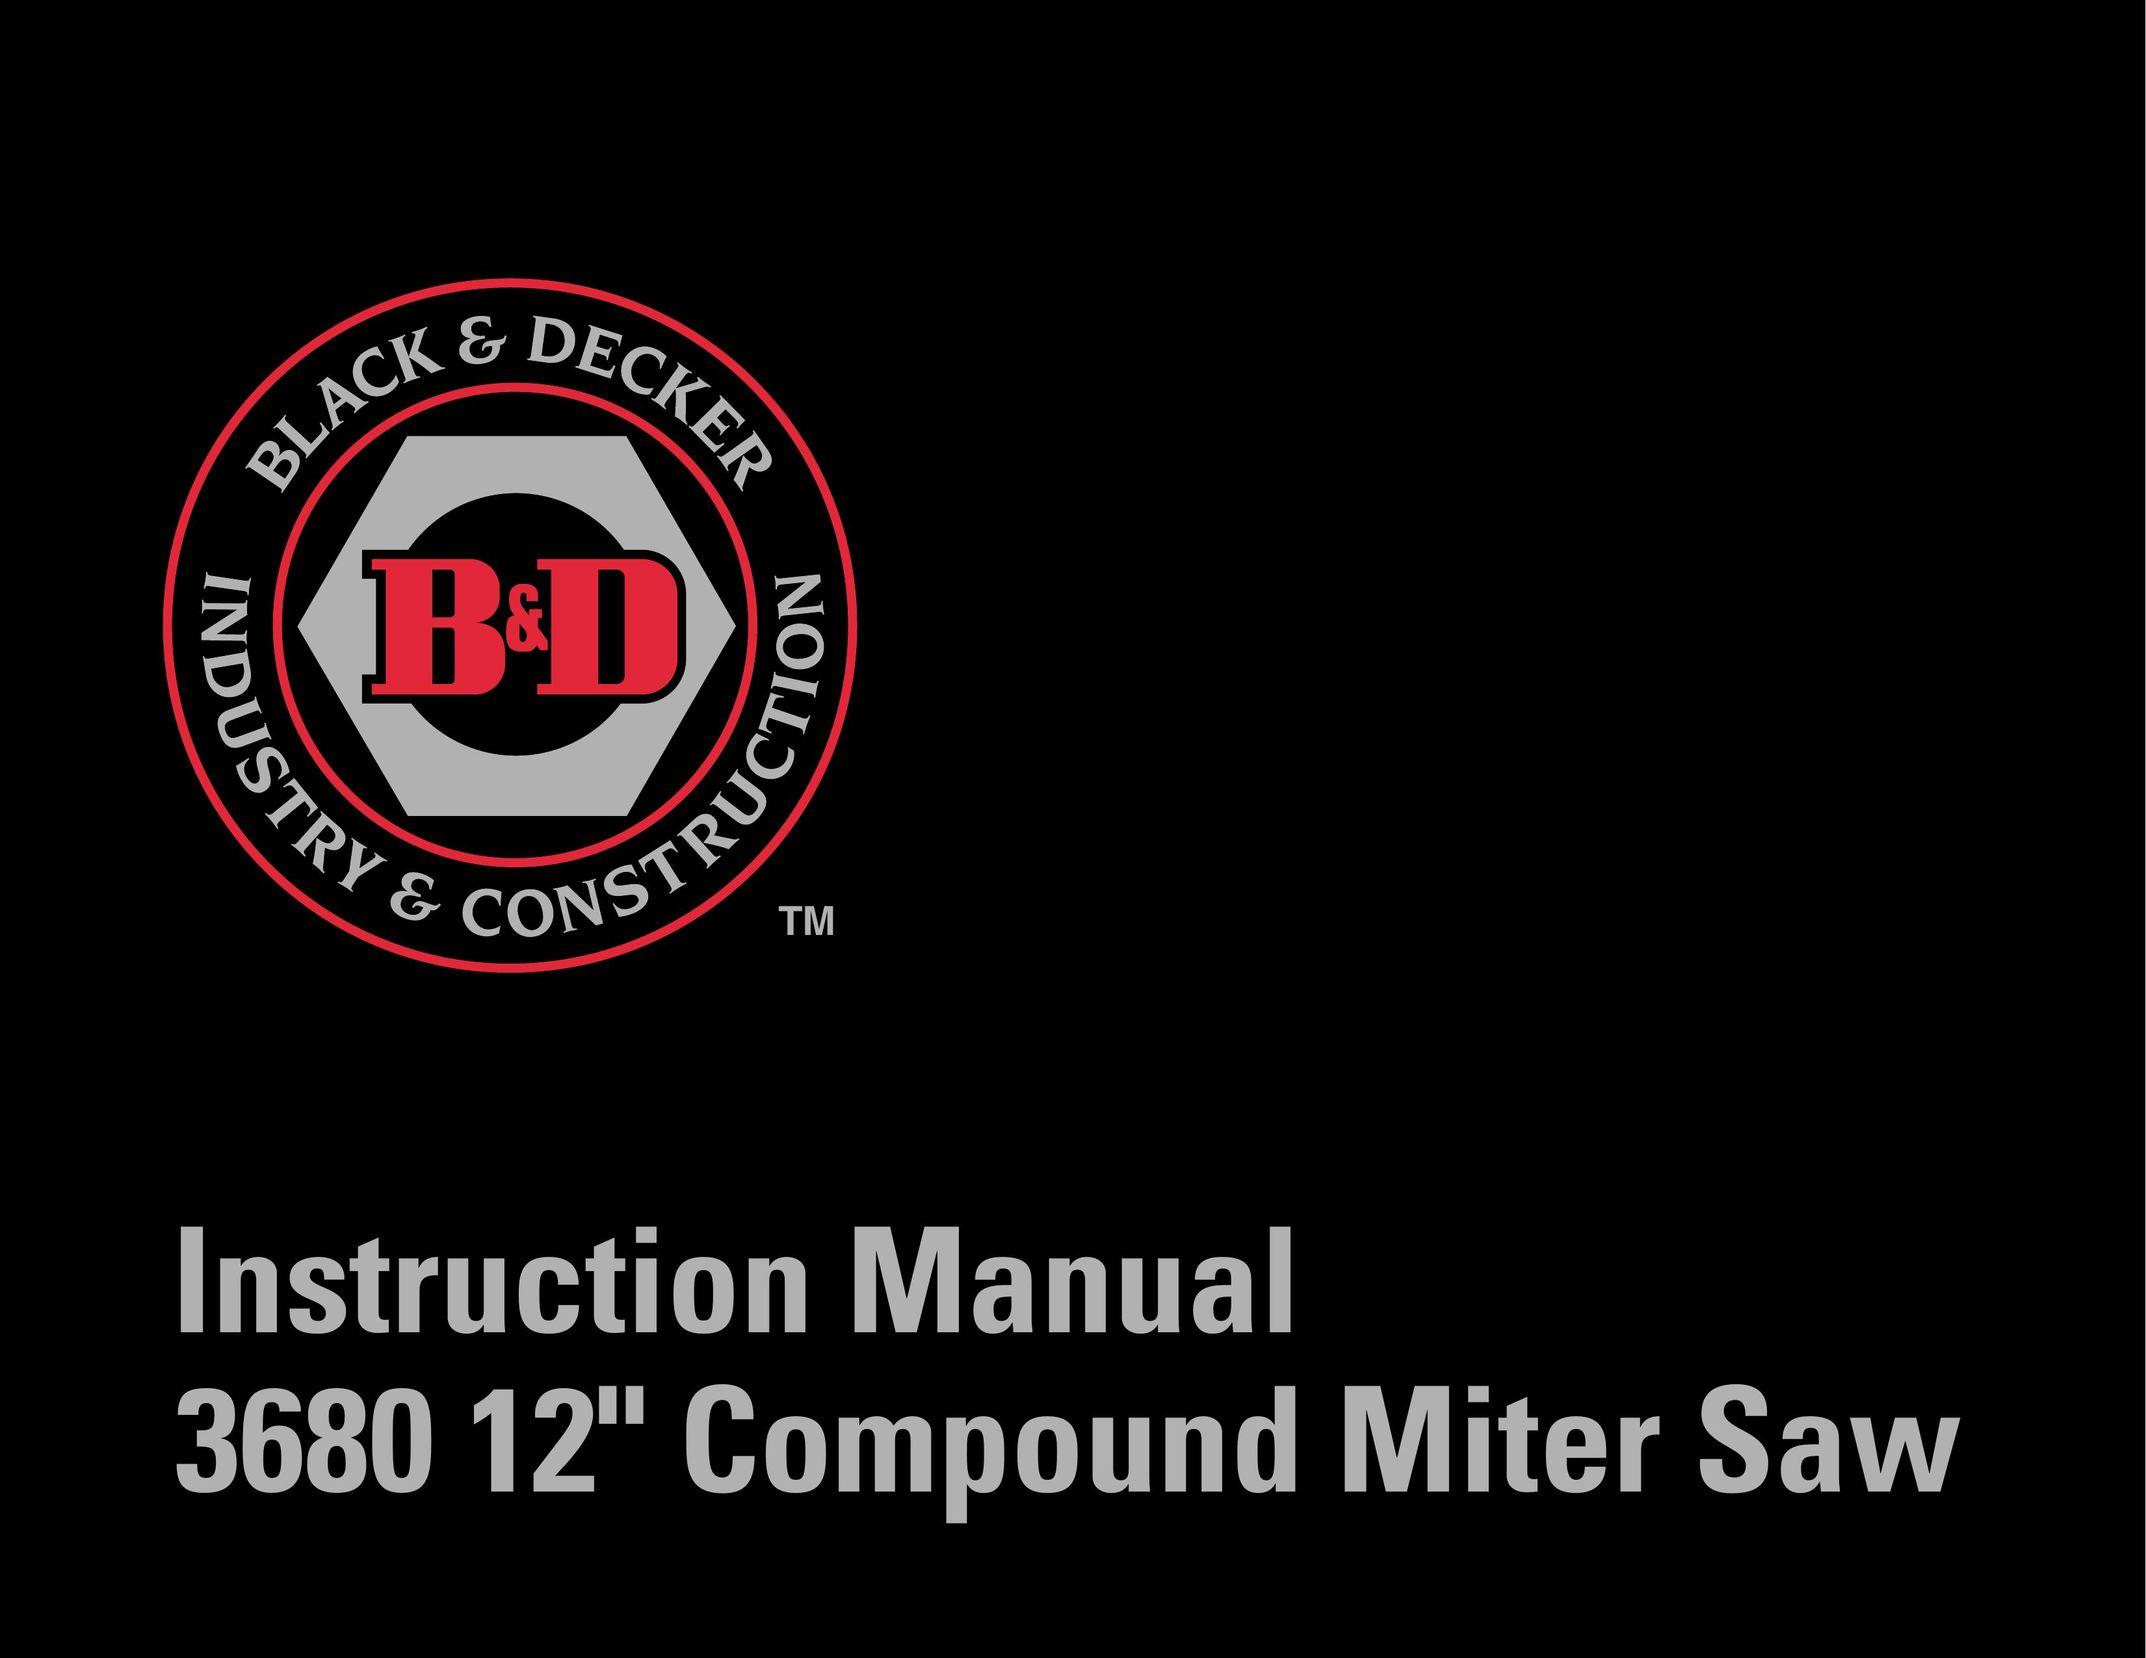 Black & Decker 3680 12" Compound Miter Saw Cordless Saw User Manual